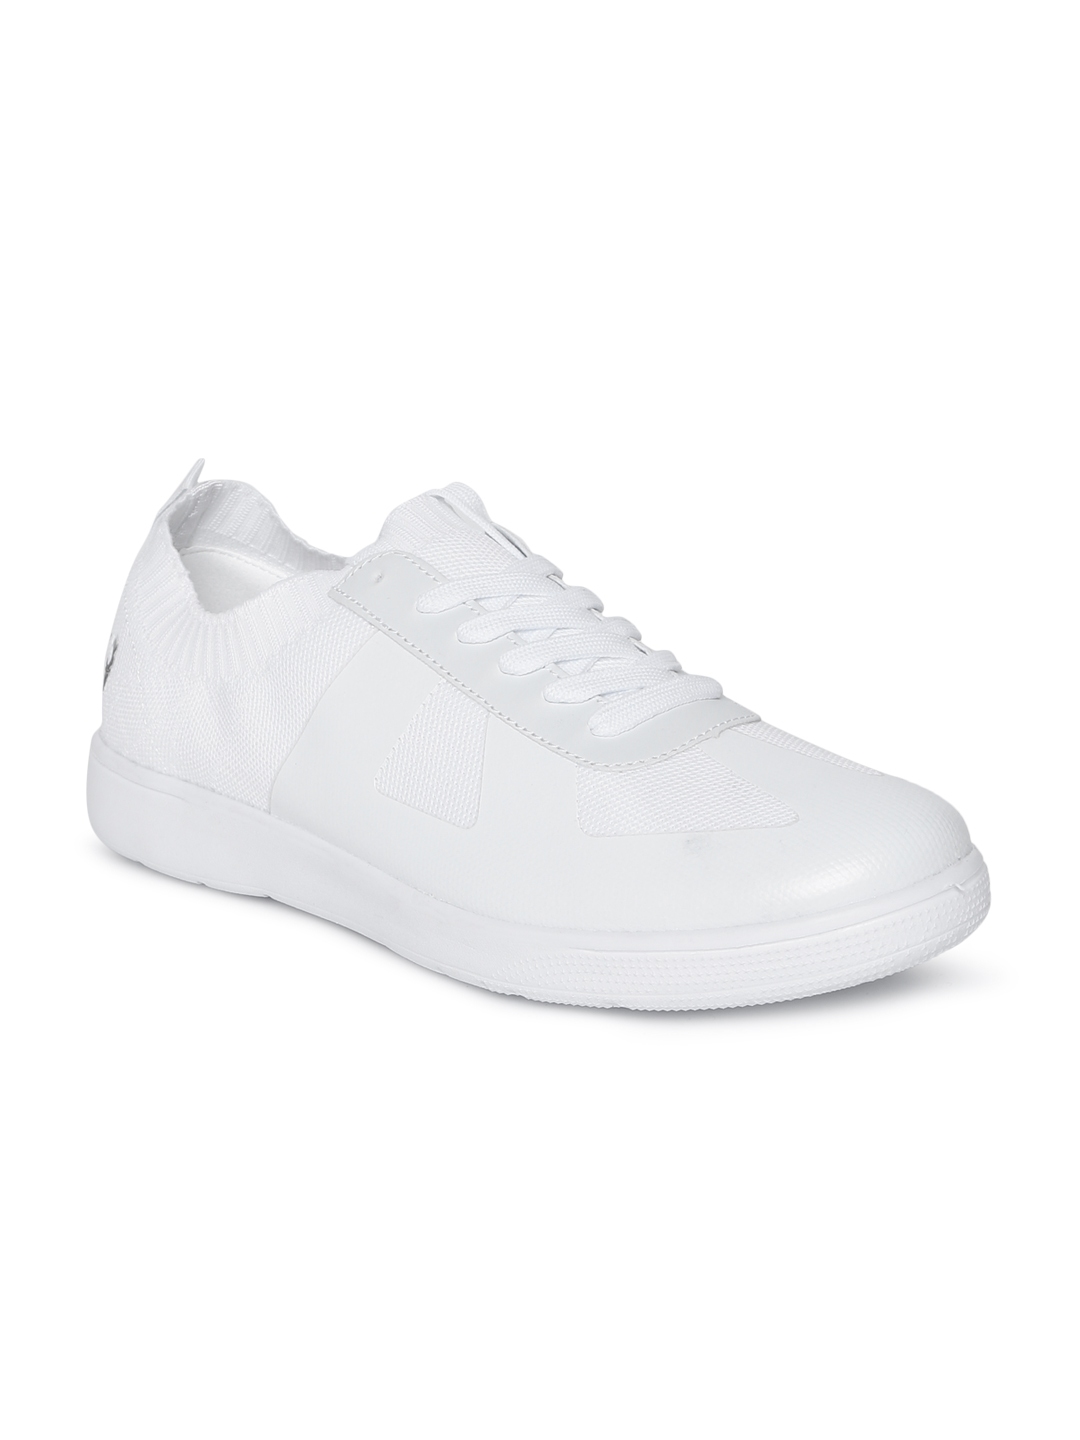 Buy Allen Solly Men White Sneakers - Casual Shoes for Men 9121689 | Myntra